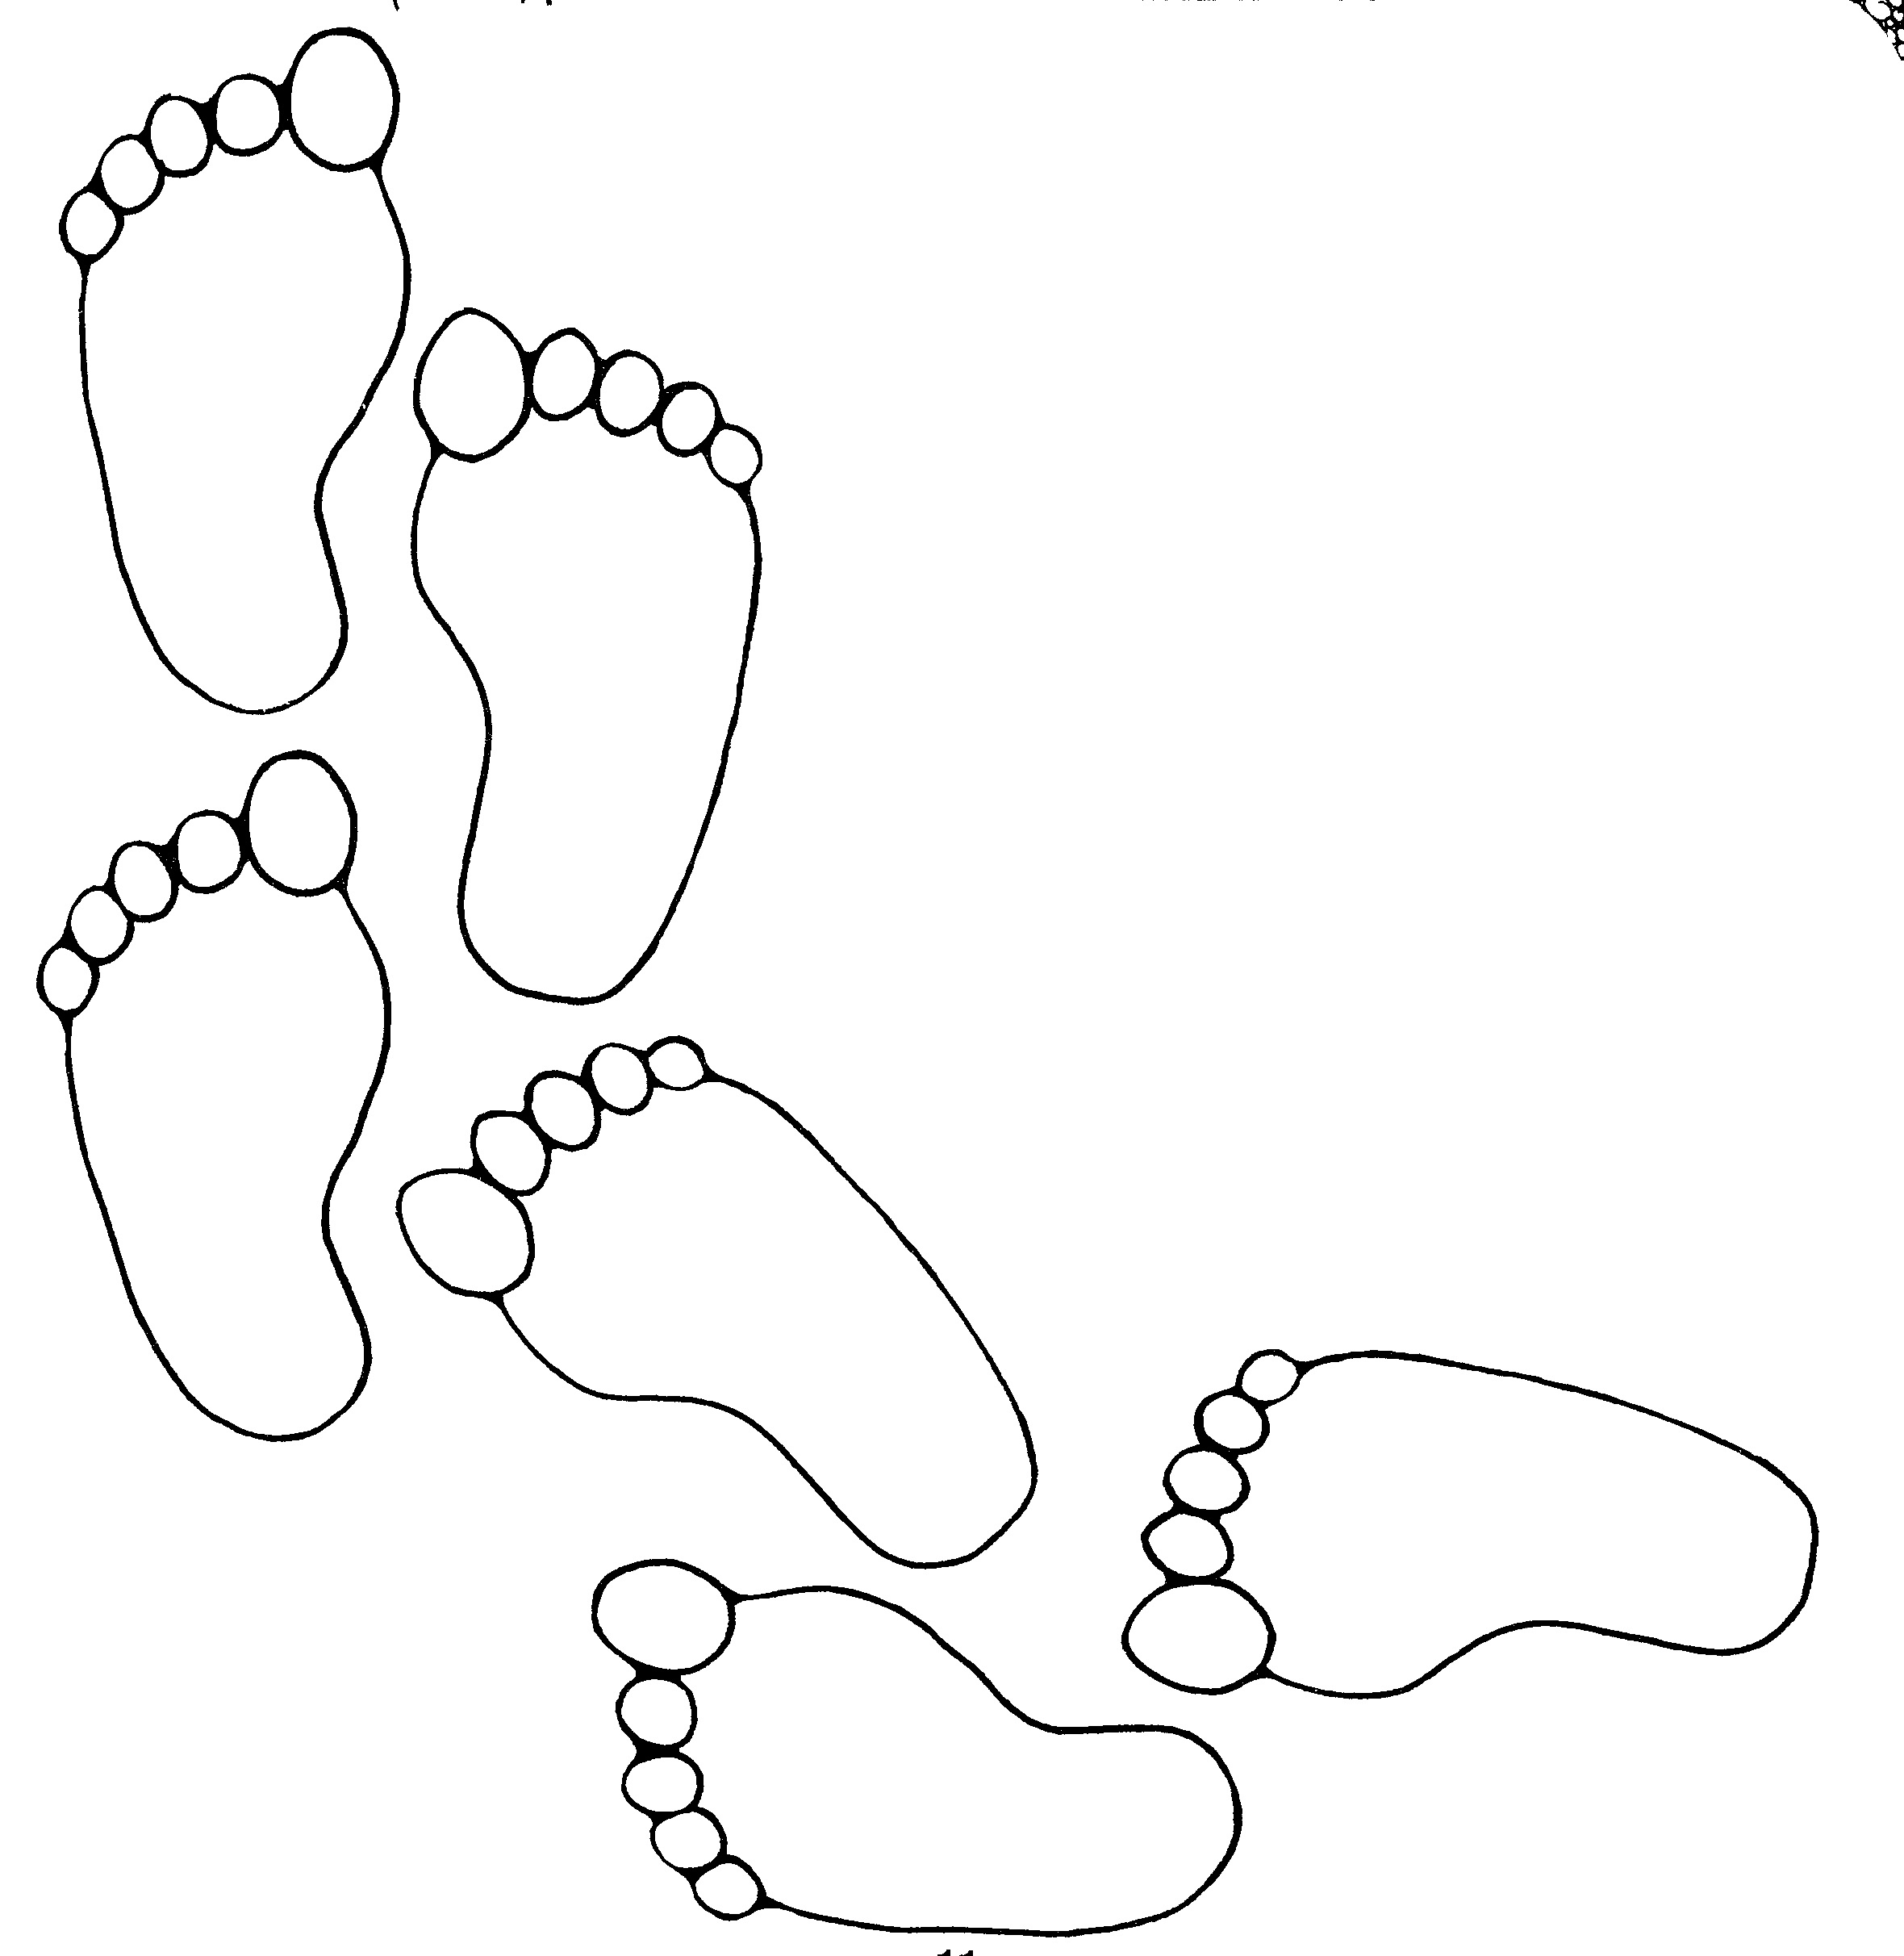 Free Printable Footprints Download Free Printable Footprints Png Images Free Cliparts On Clipart Library